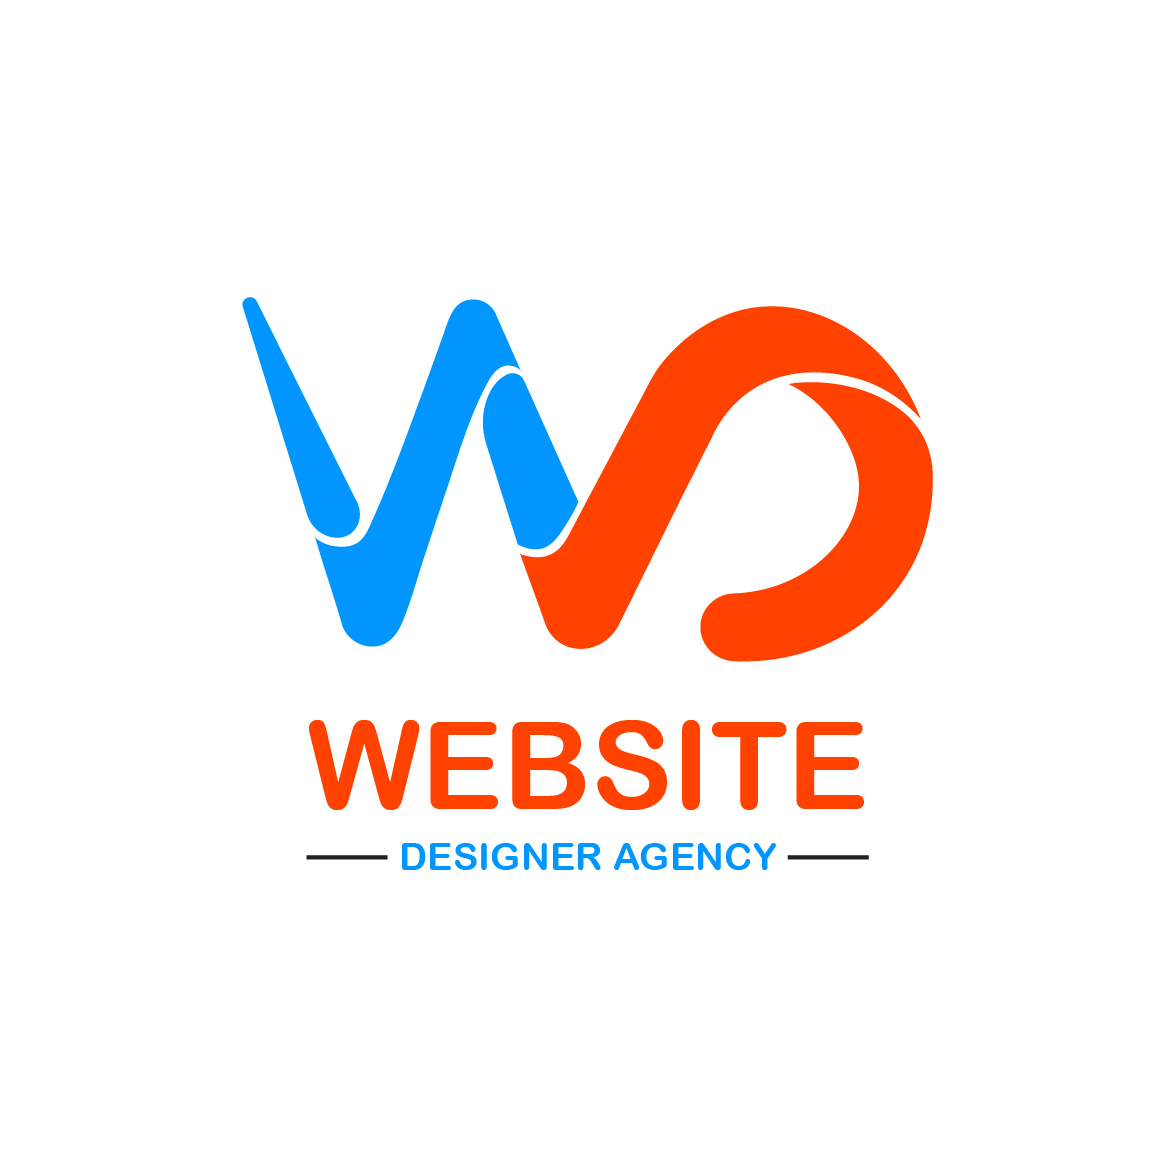 Website Design And Development and landing page developer agency logo